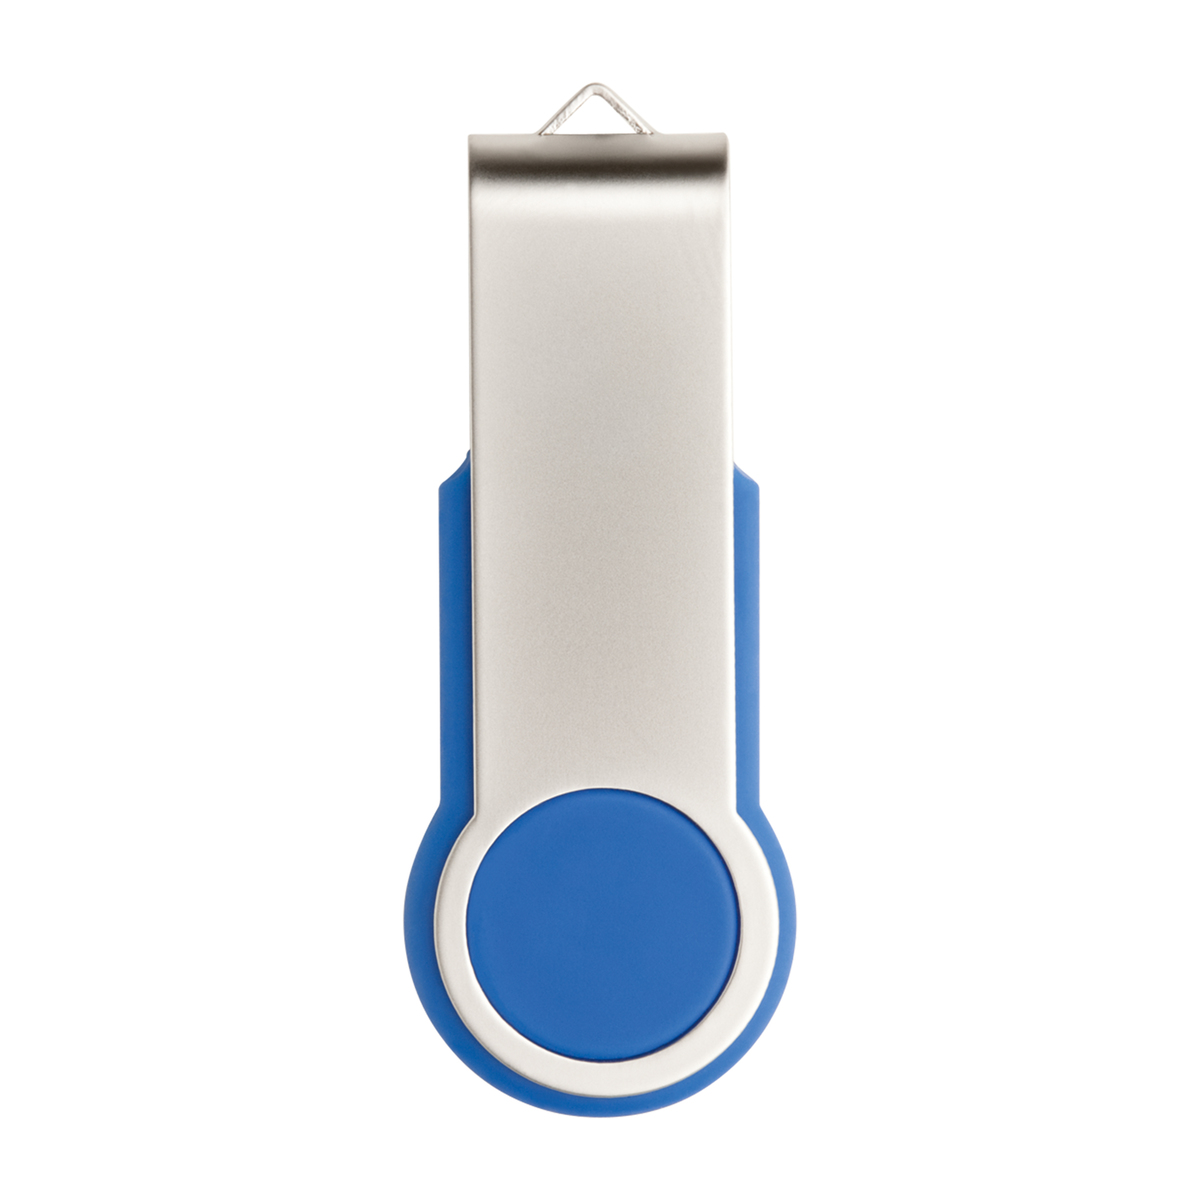 LM USB-Speicherstick 2 BLUE 4GB blau